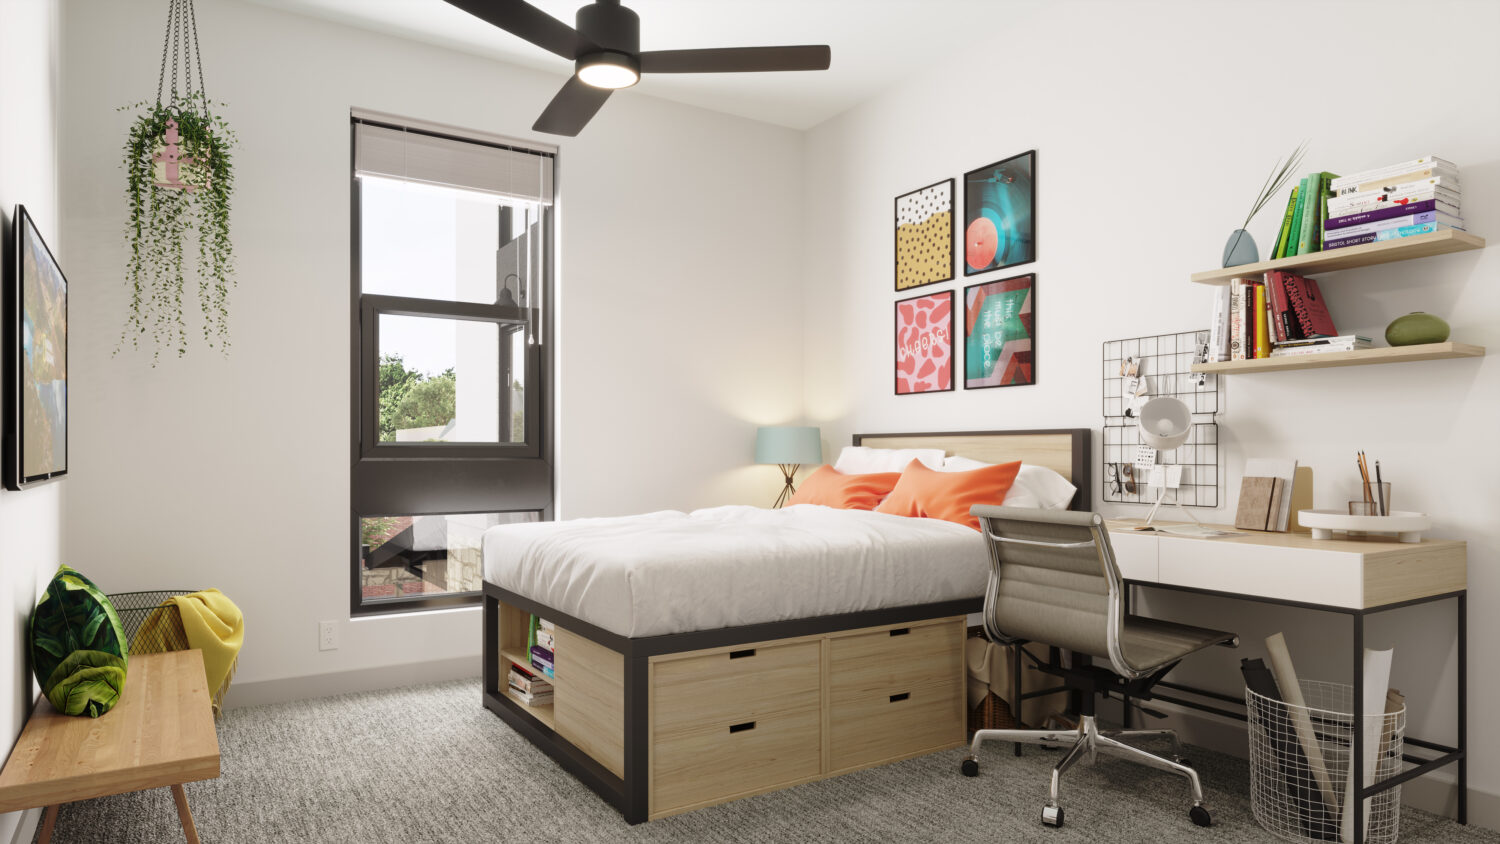 Bedroom with plush carpet, ceiling fan, platform bed and desk